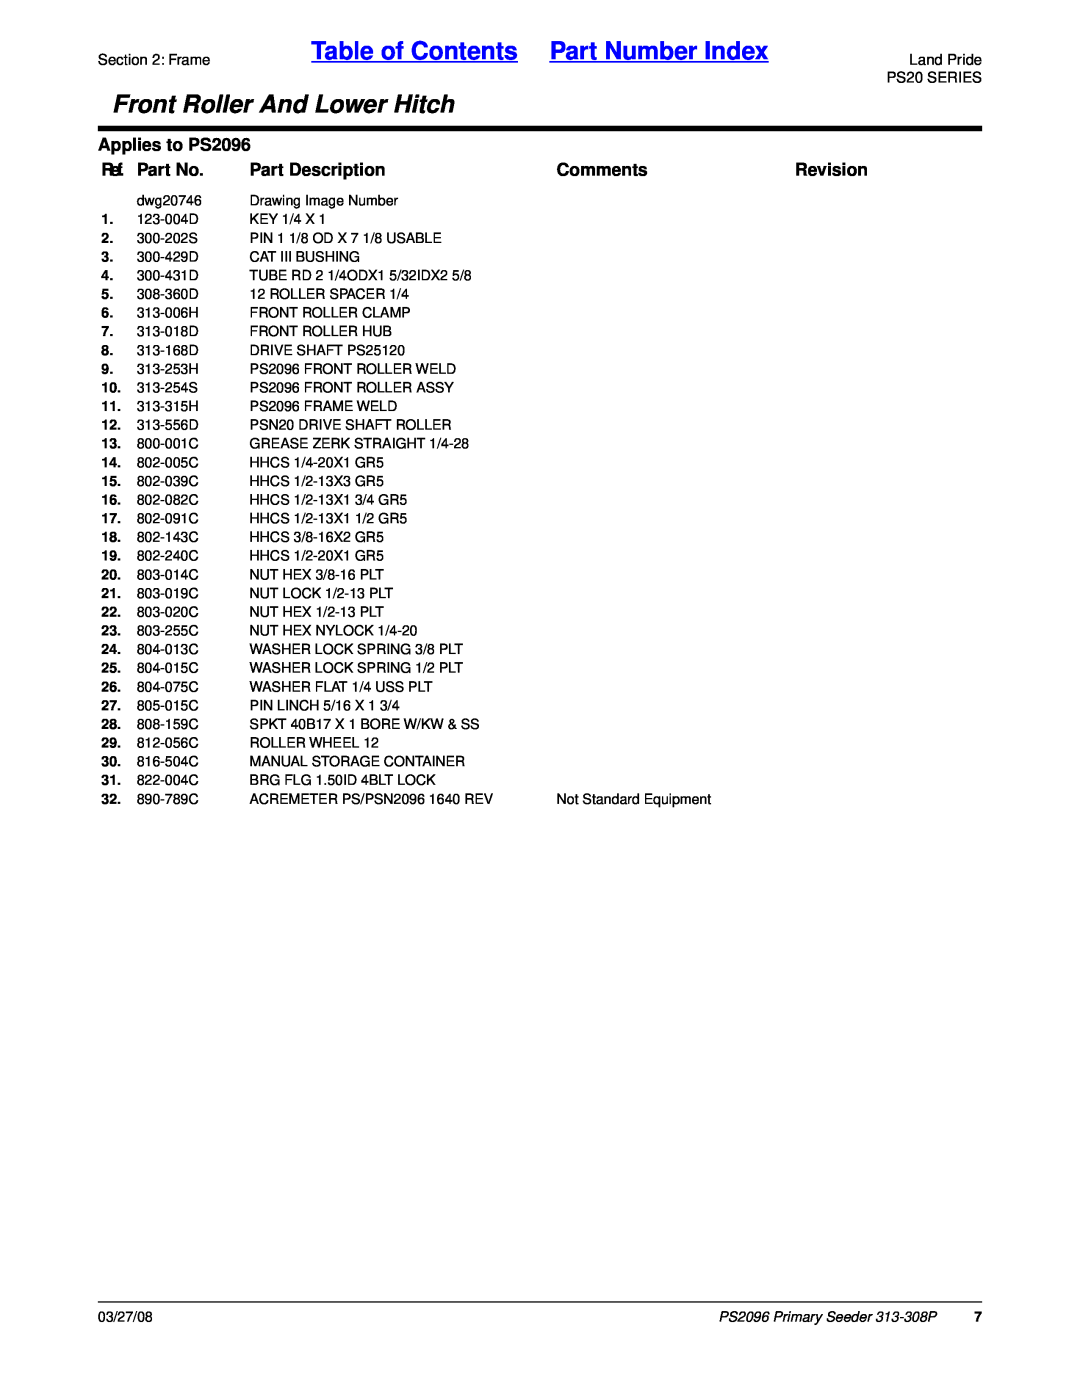 Land Pride PS2096 manual Ref. Part No, Part Description, Comments, Revision, Table of Contents Part Number Index, dwg20746 